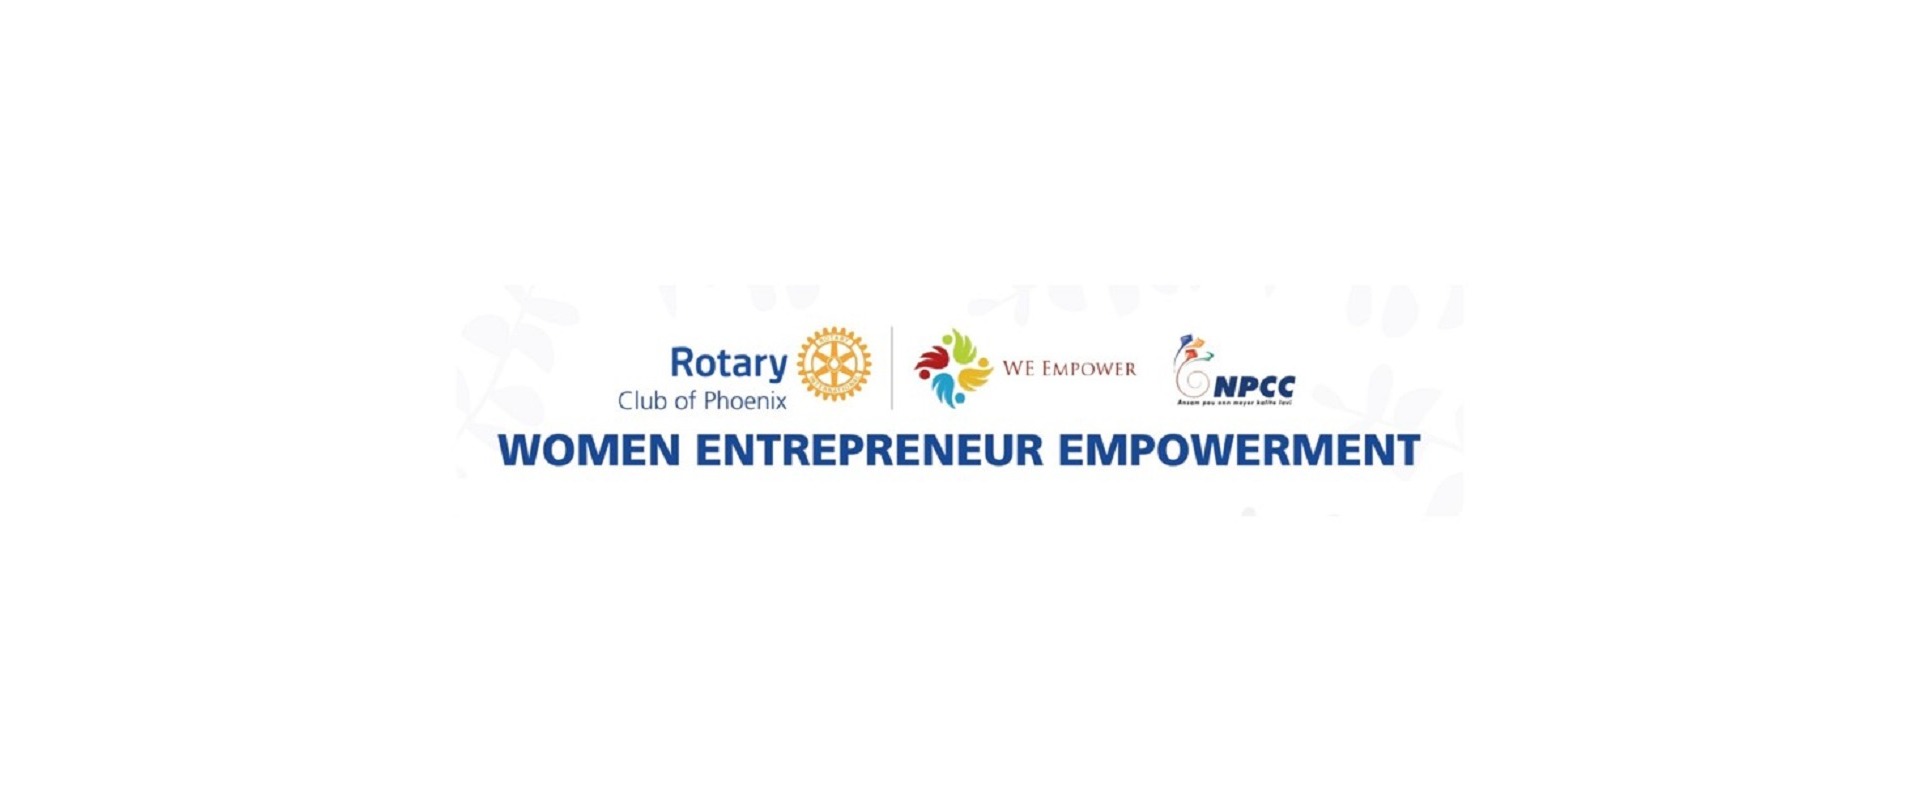 Enroll for the Women Entrepreneur Empowerment Course